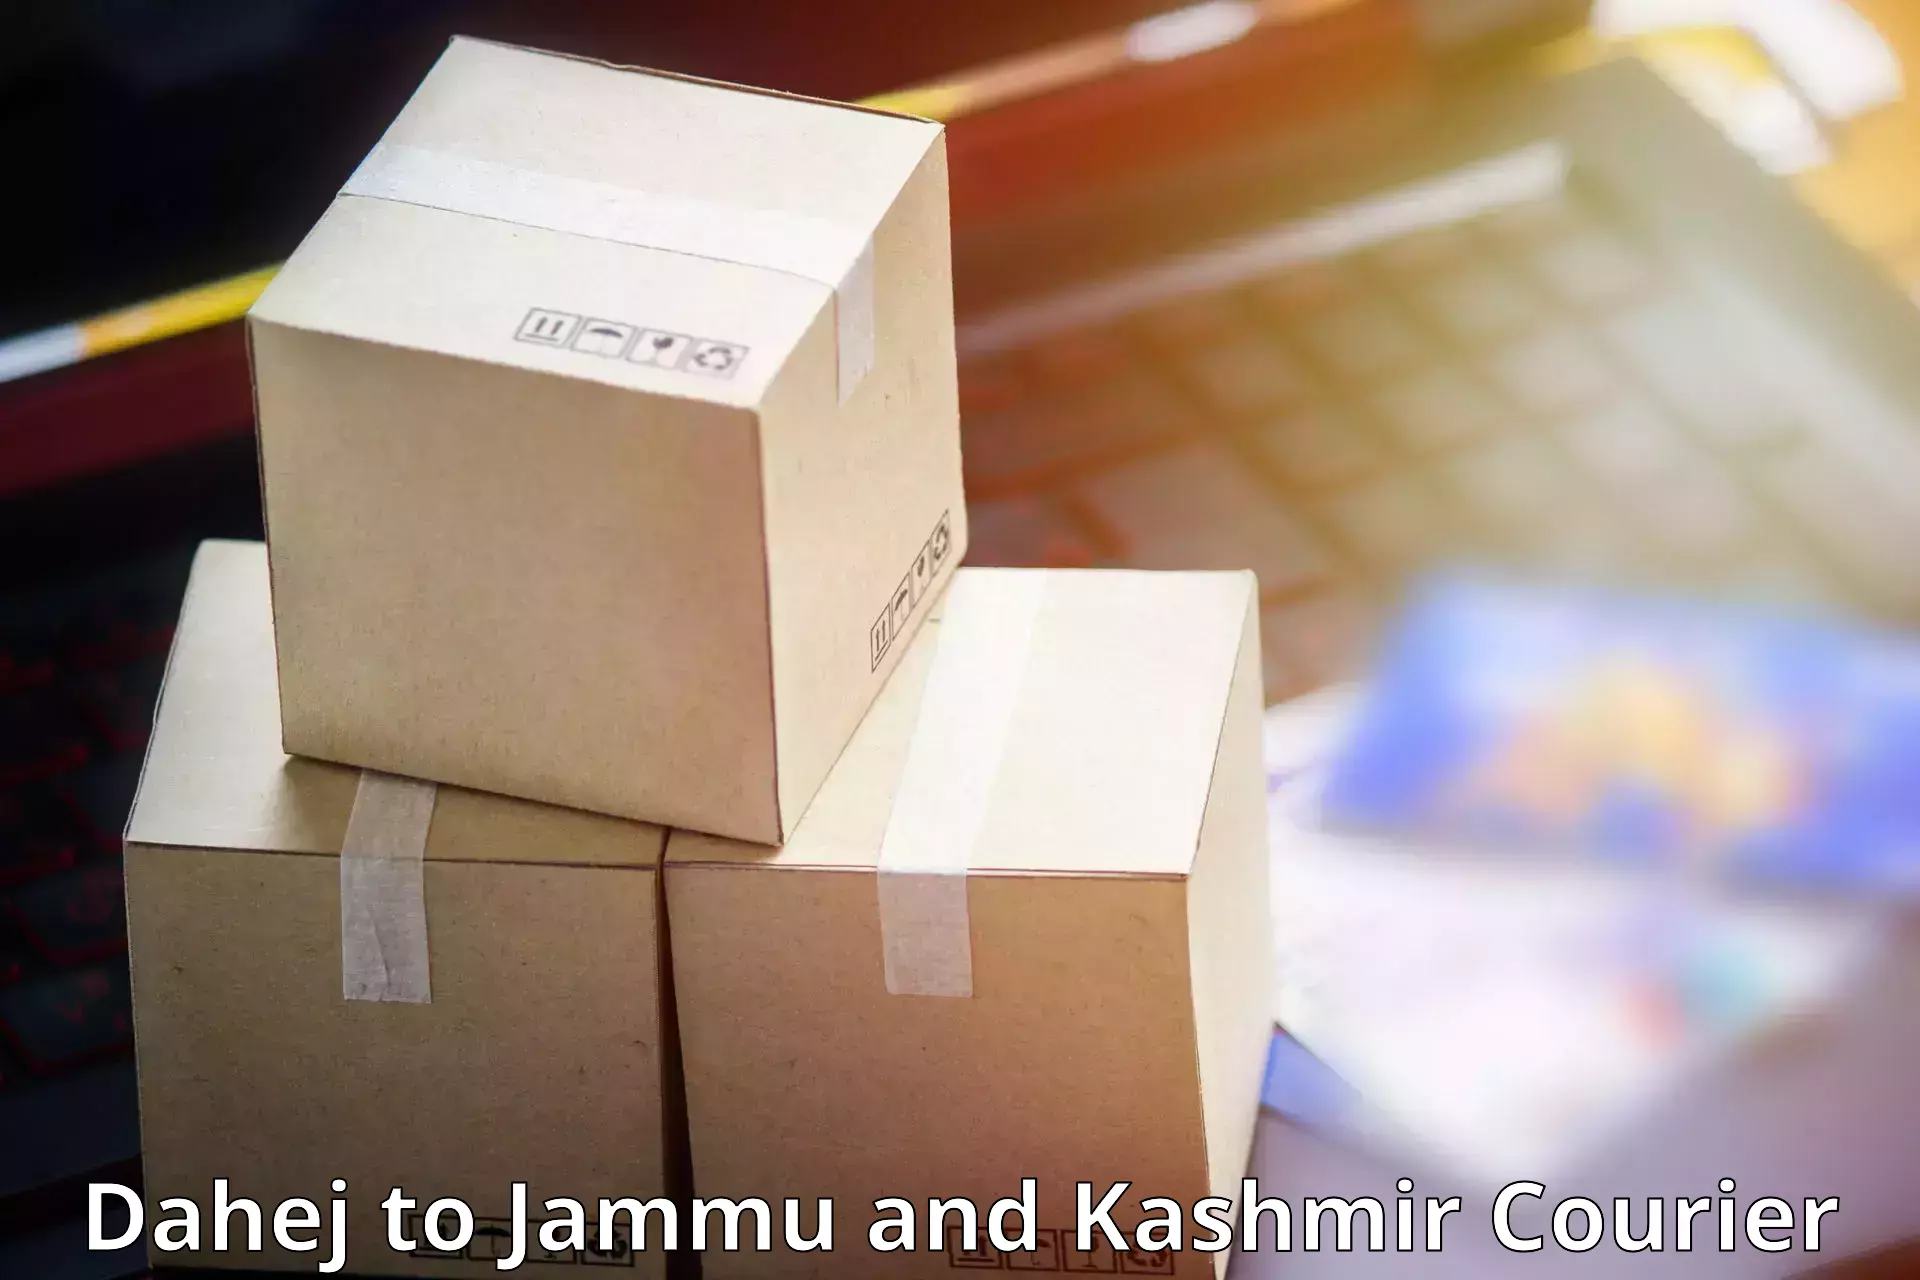 User-friendly courier app Dahej to Srinagar Kashmir